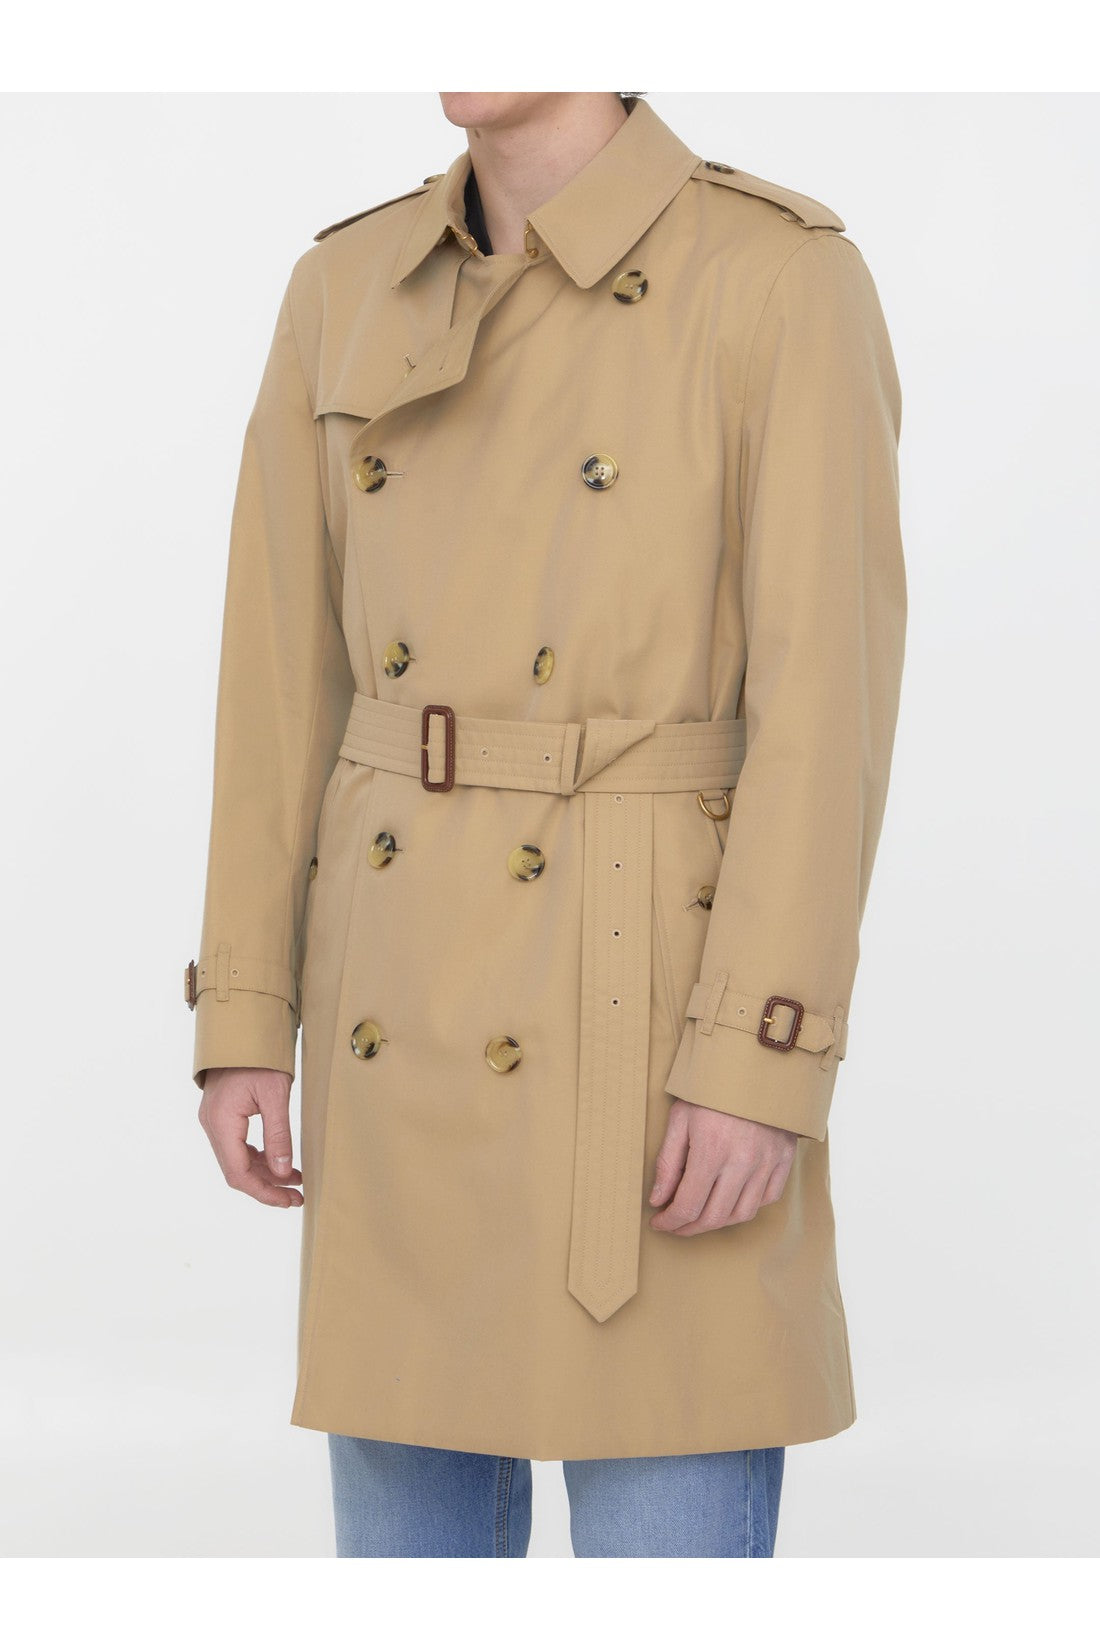 Kensington Heritage trench coat